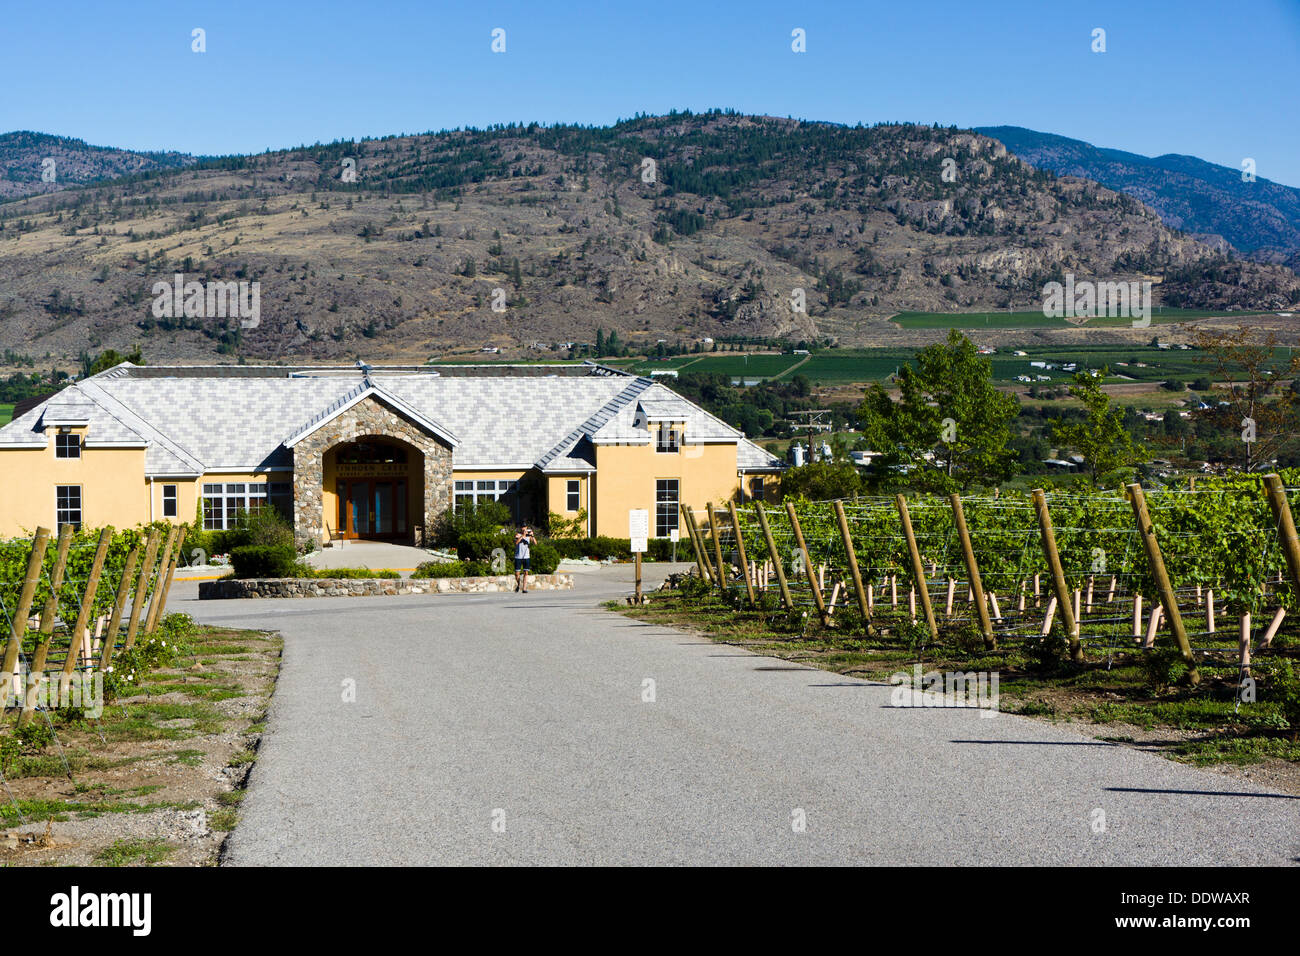 Tinhorn Creek Winery, Oliver, südliche Okanagan, British Columbia, Kanada. Stockfoto